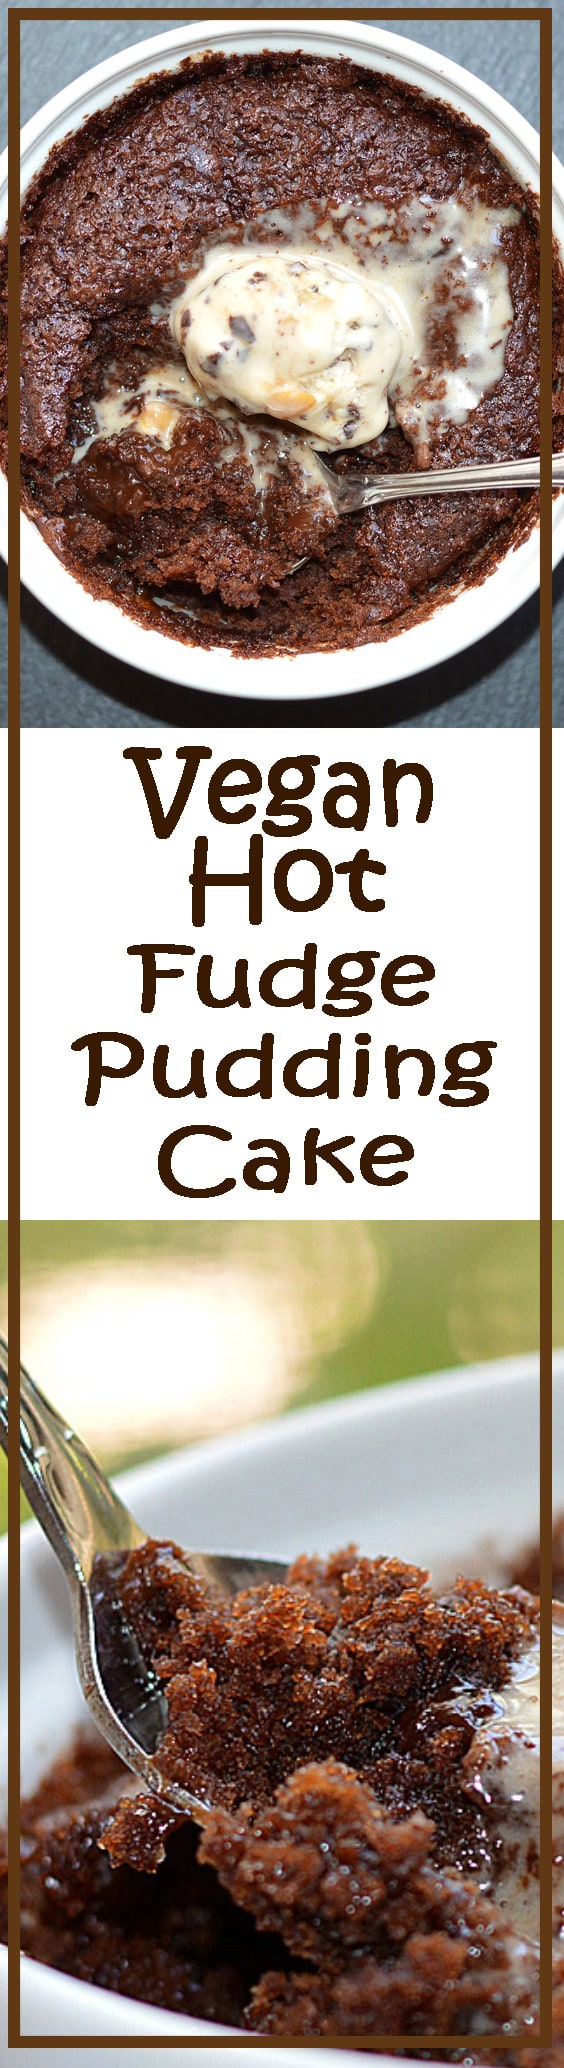 Hot Fudge Pudding Cake